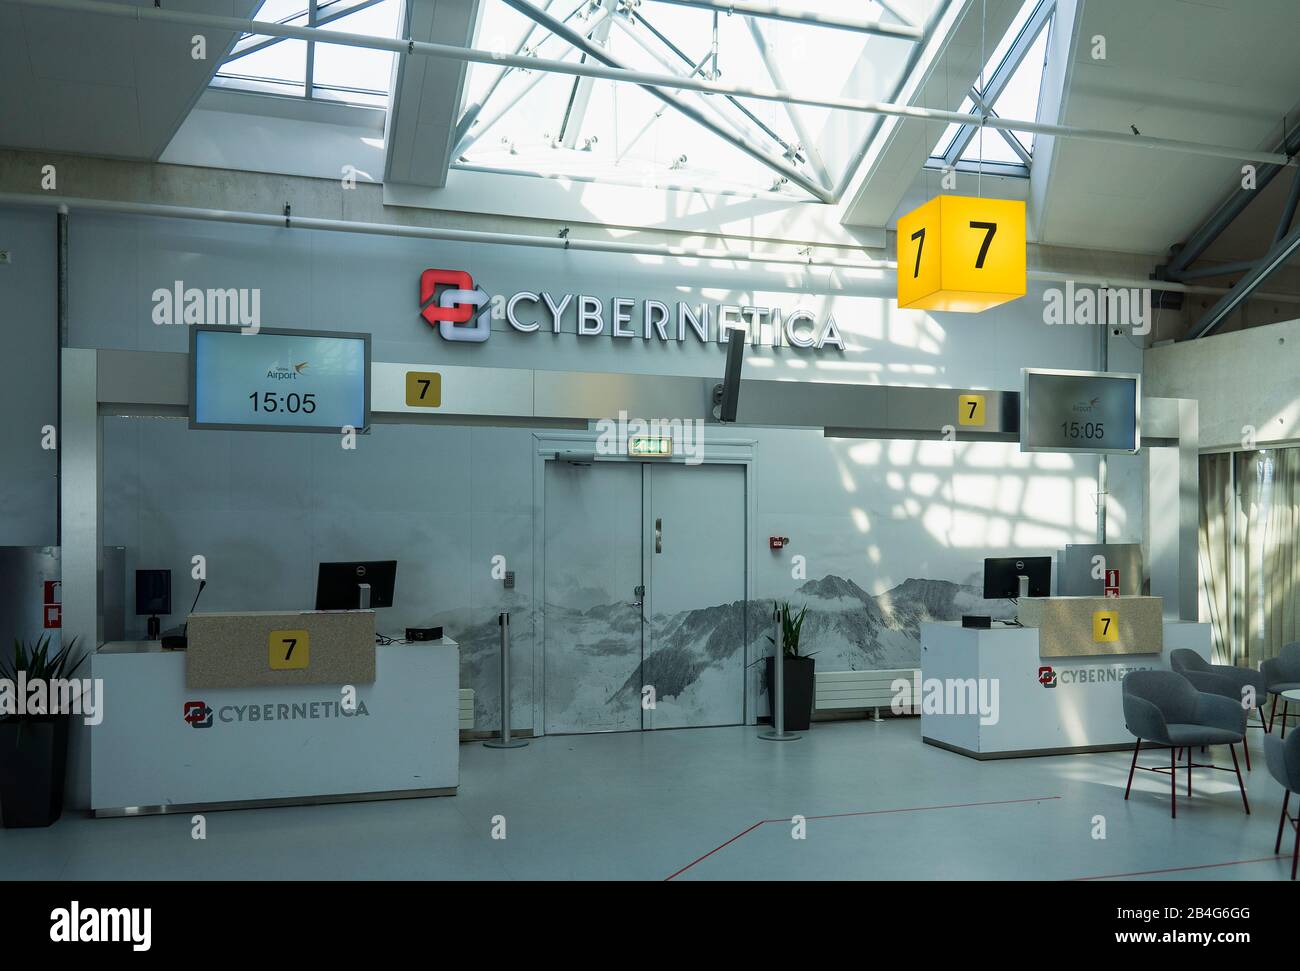 Estonia, Tallinn, airport, Lennart Meri Airport, modern passenger terminal, Gate 7, 'Cybernetica'. Stock Photo